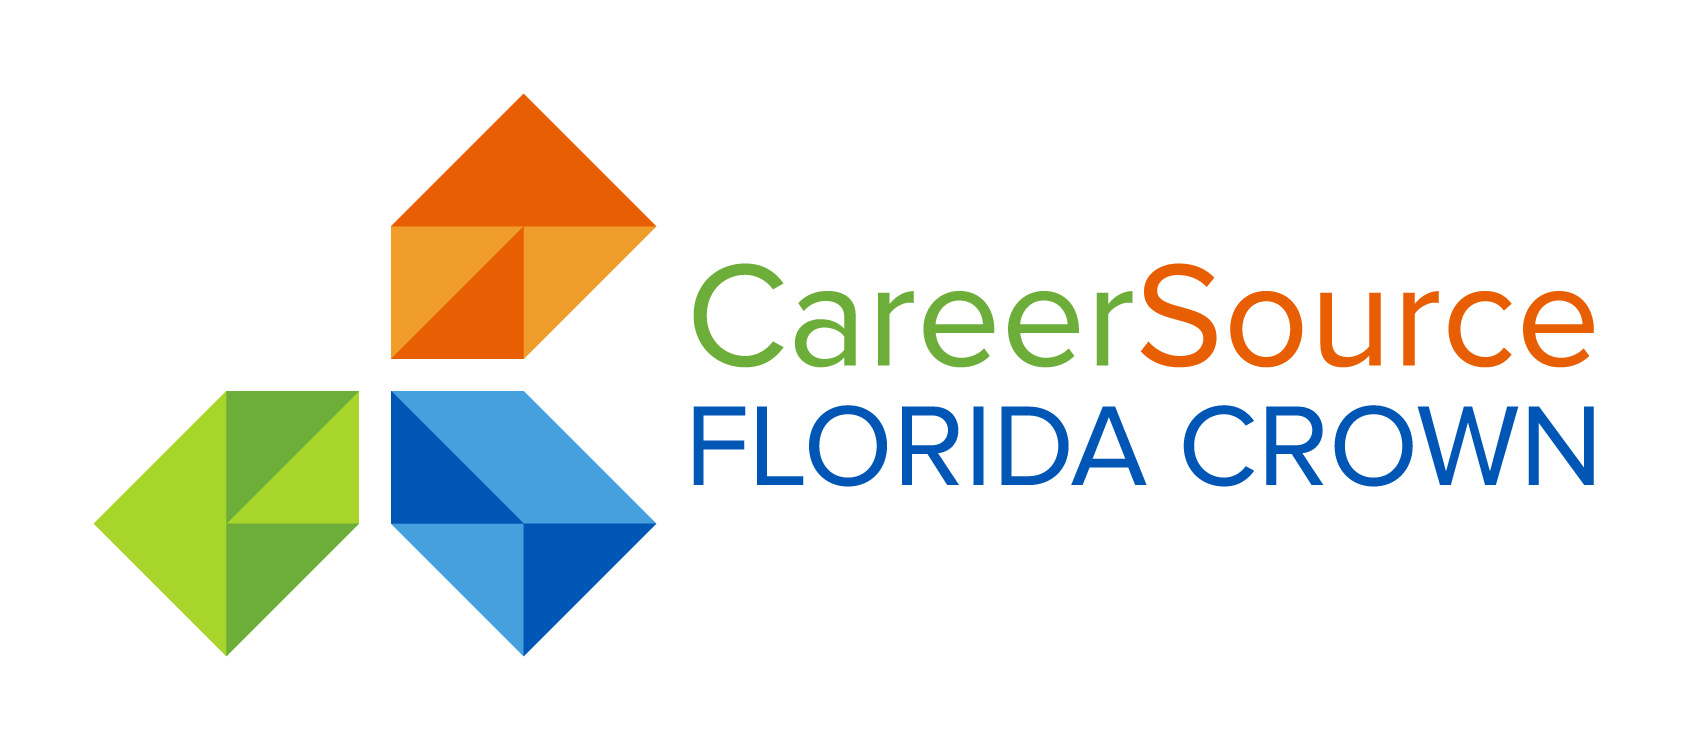 CareerSource Florida Crown logo